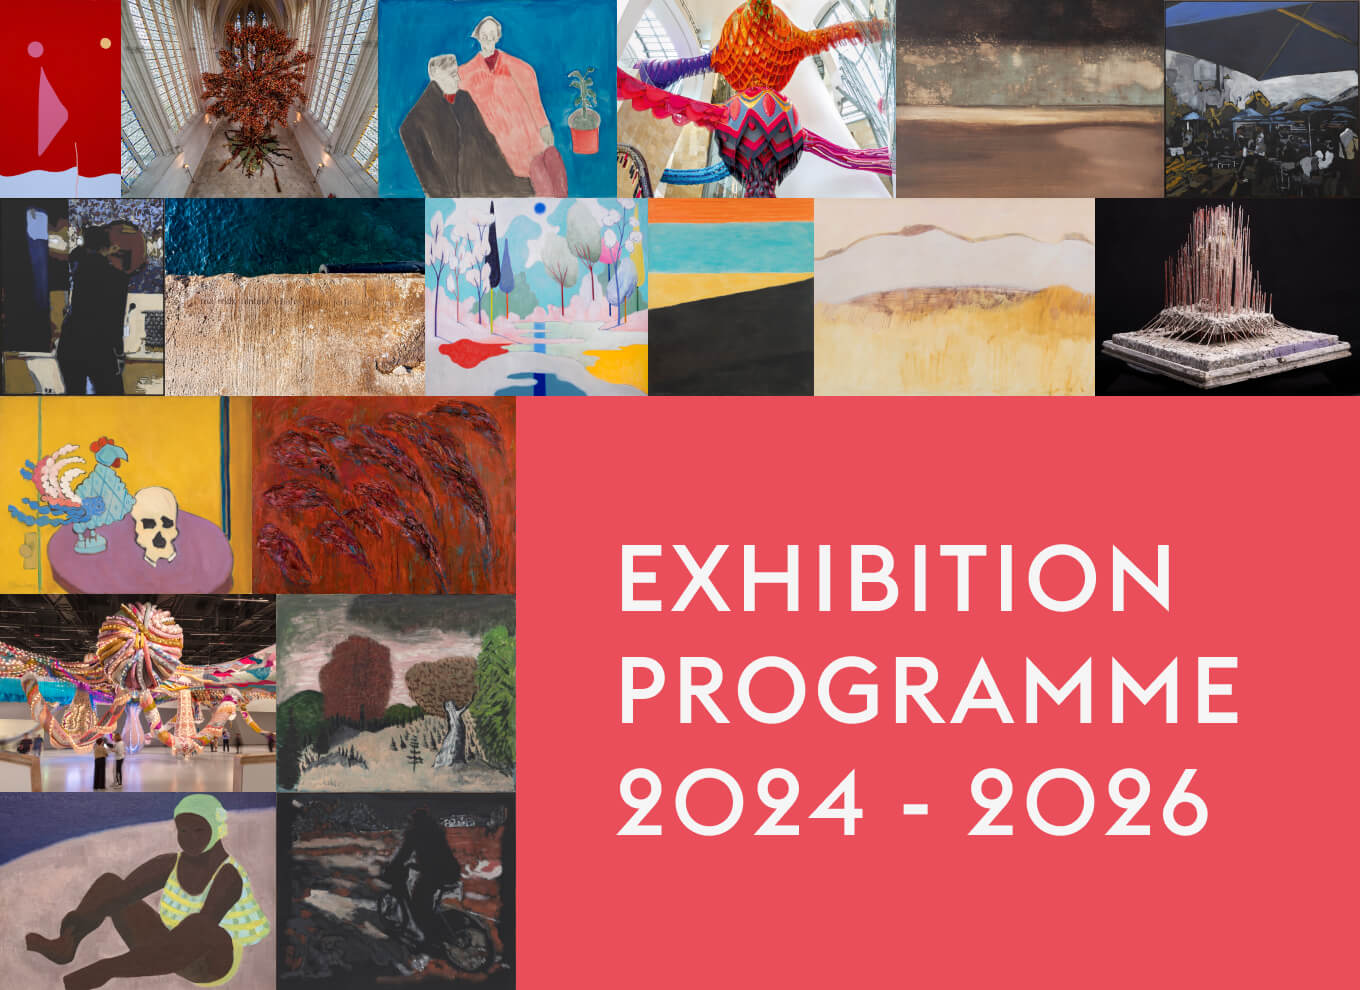 Carousel-Exhibition-Programme-2024-2026 (1)